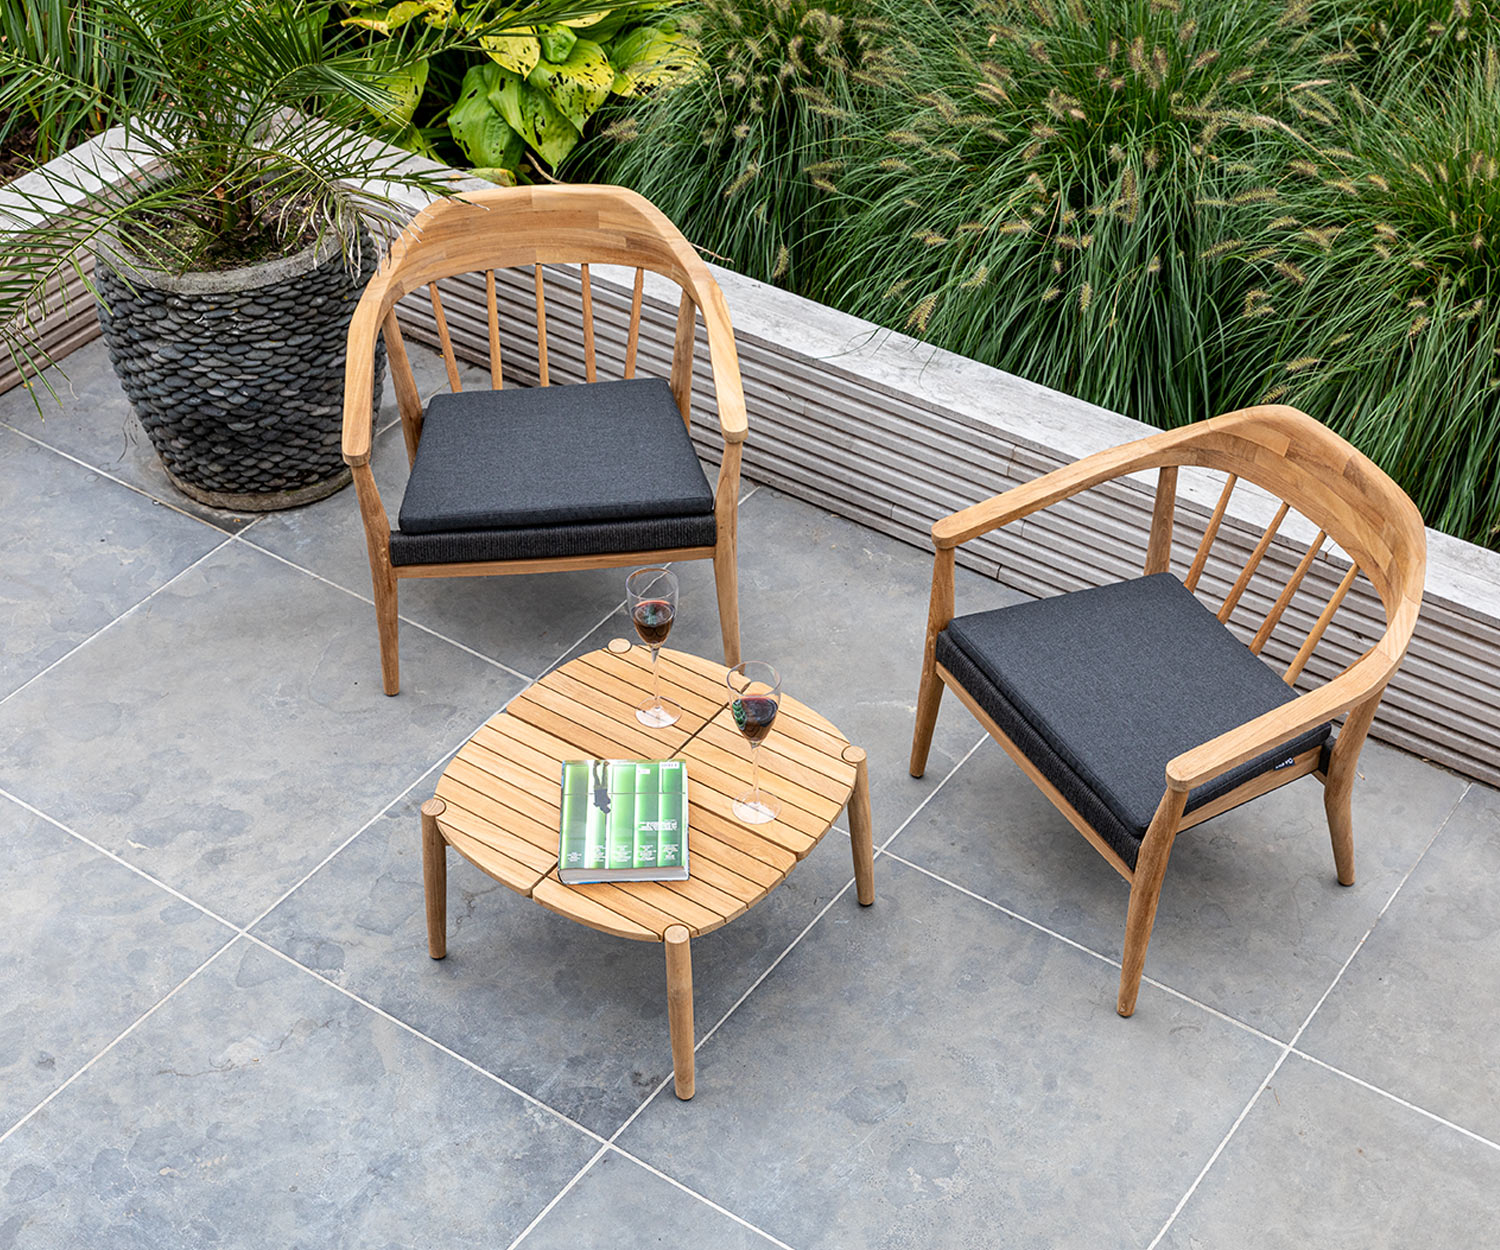 Weatherproof Oasiq Copenhagen design lounge chair with side table